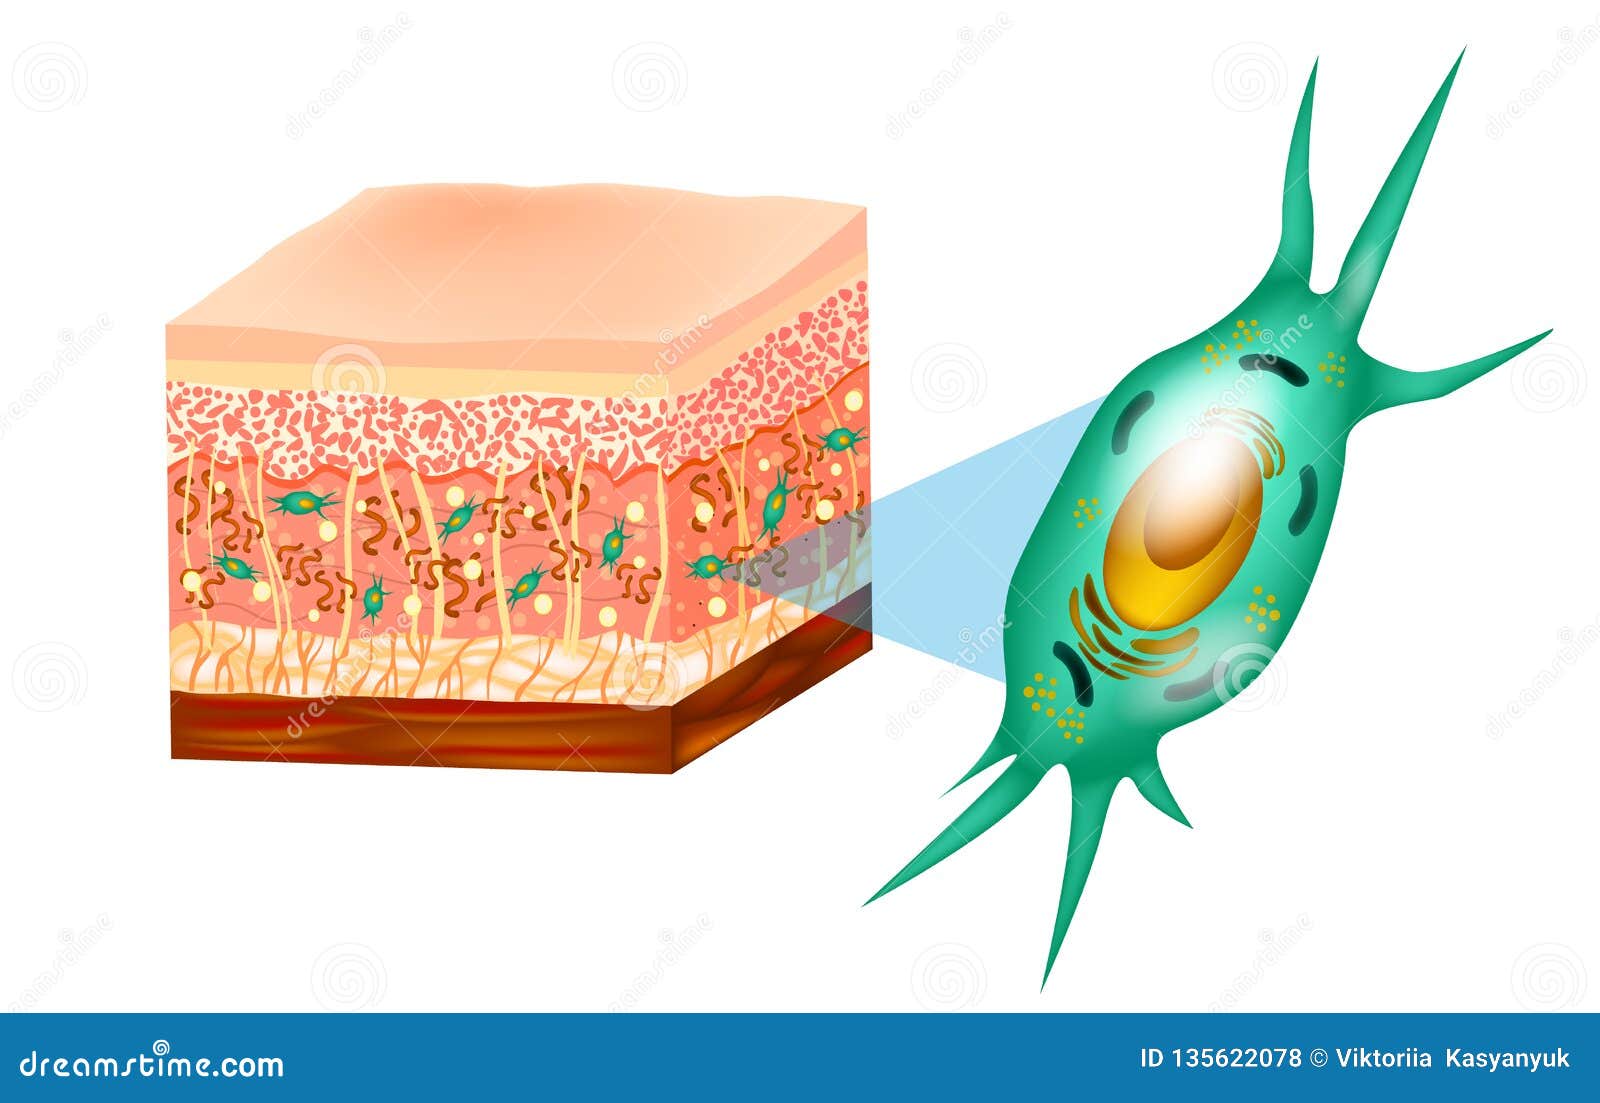 fibroblast and skin structure